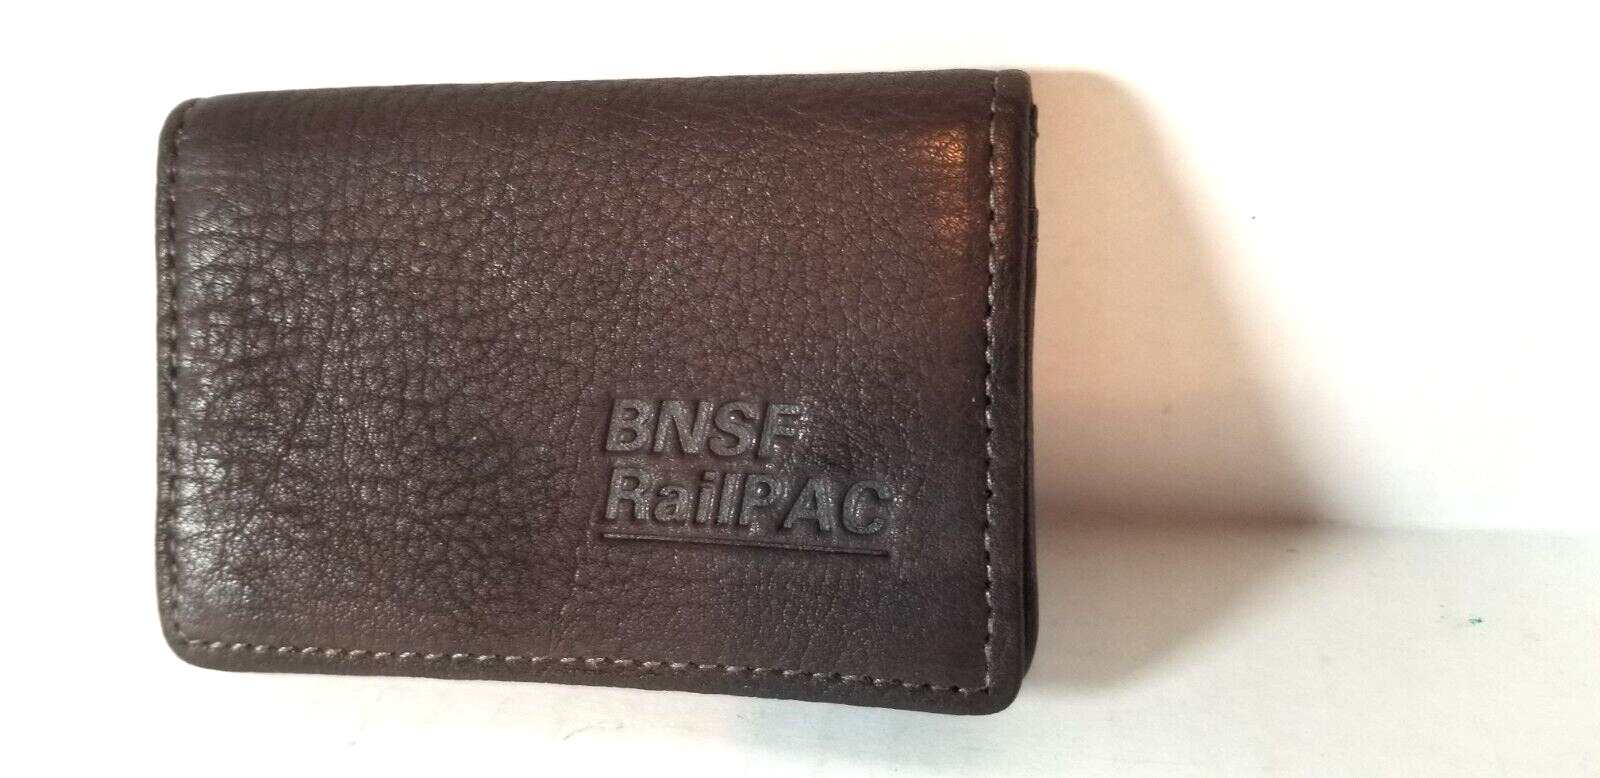 BNSF Railpack Brown Leather Business Card Holder Cash Railroad Train